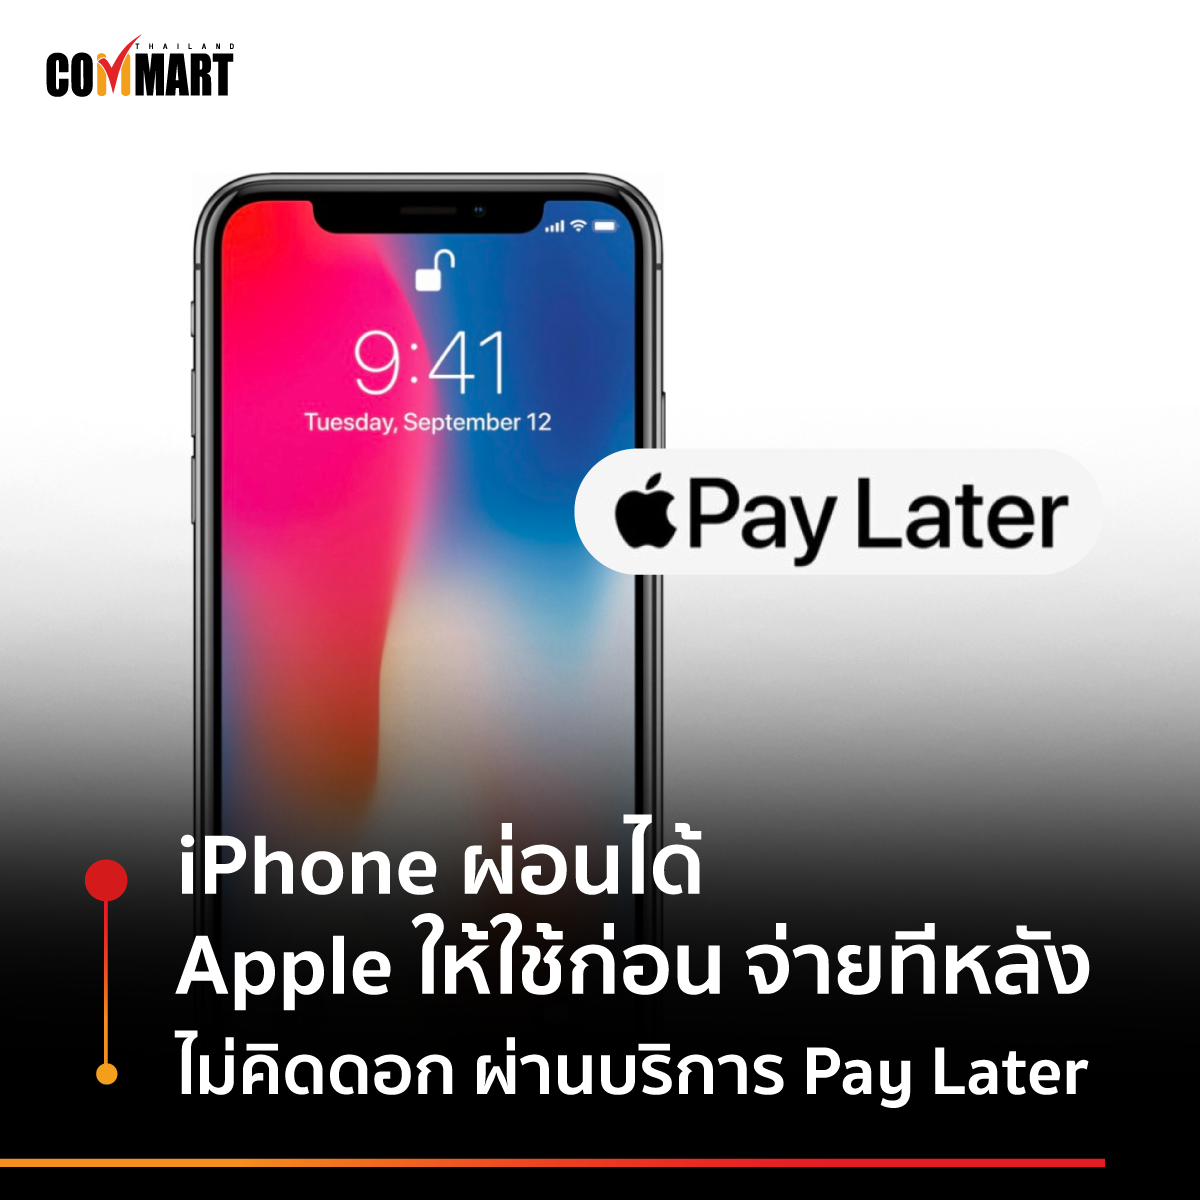 iPhone ผ่อนได้ Apple ให้ใช้ก่อน จ่ายทีหลัง ไม่คิดดอก ผ่านบริการ Pay Later